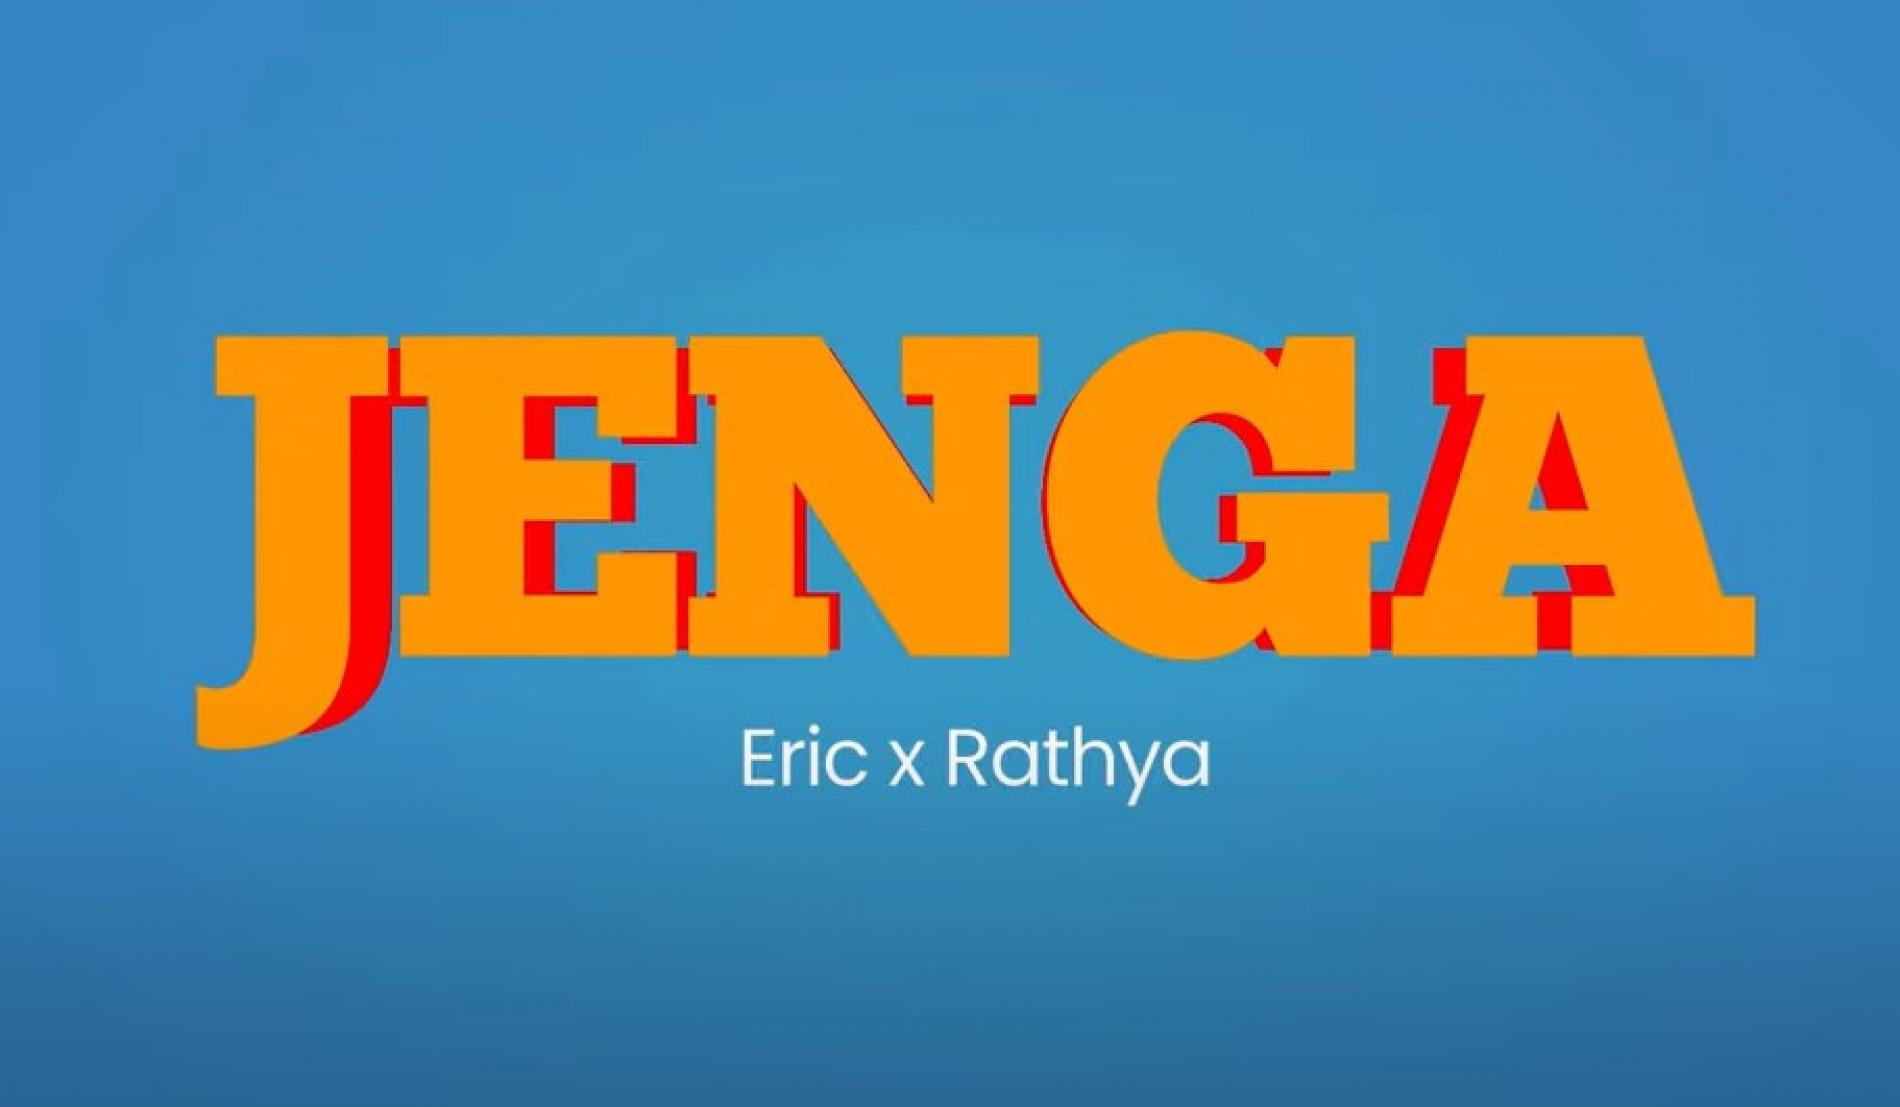 New Music : Jenga | Eric Heinrichs & Rathya (Official Lyric Video)